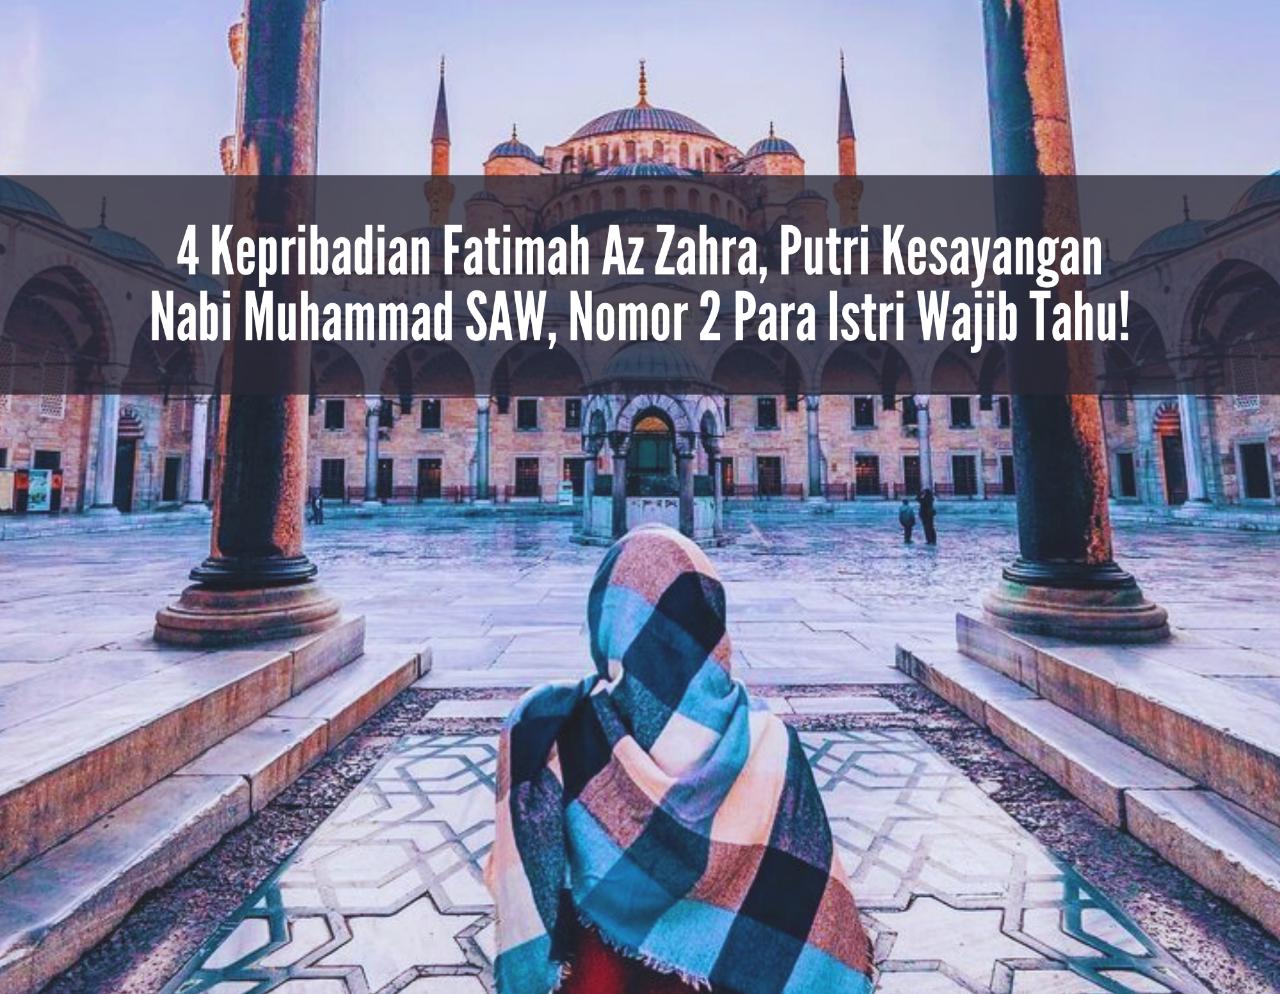 4 Kepribadian Fatimah Az-Zahra, Putri Kesayangan Nabi Muhammad SAW, Nomor 2 Para Istri Wajib Tahu!